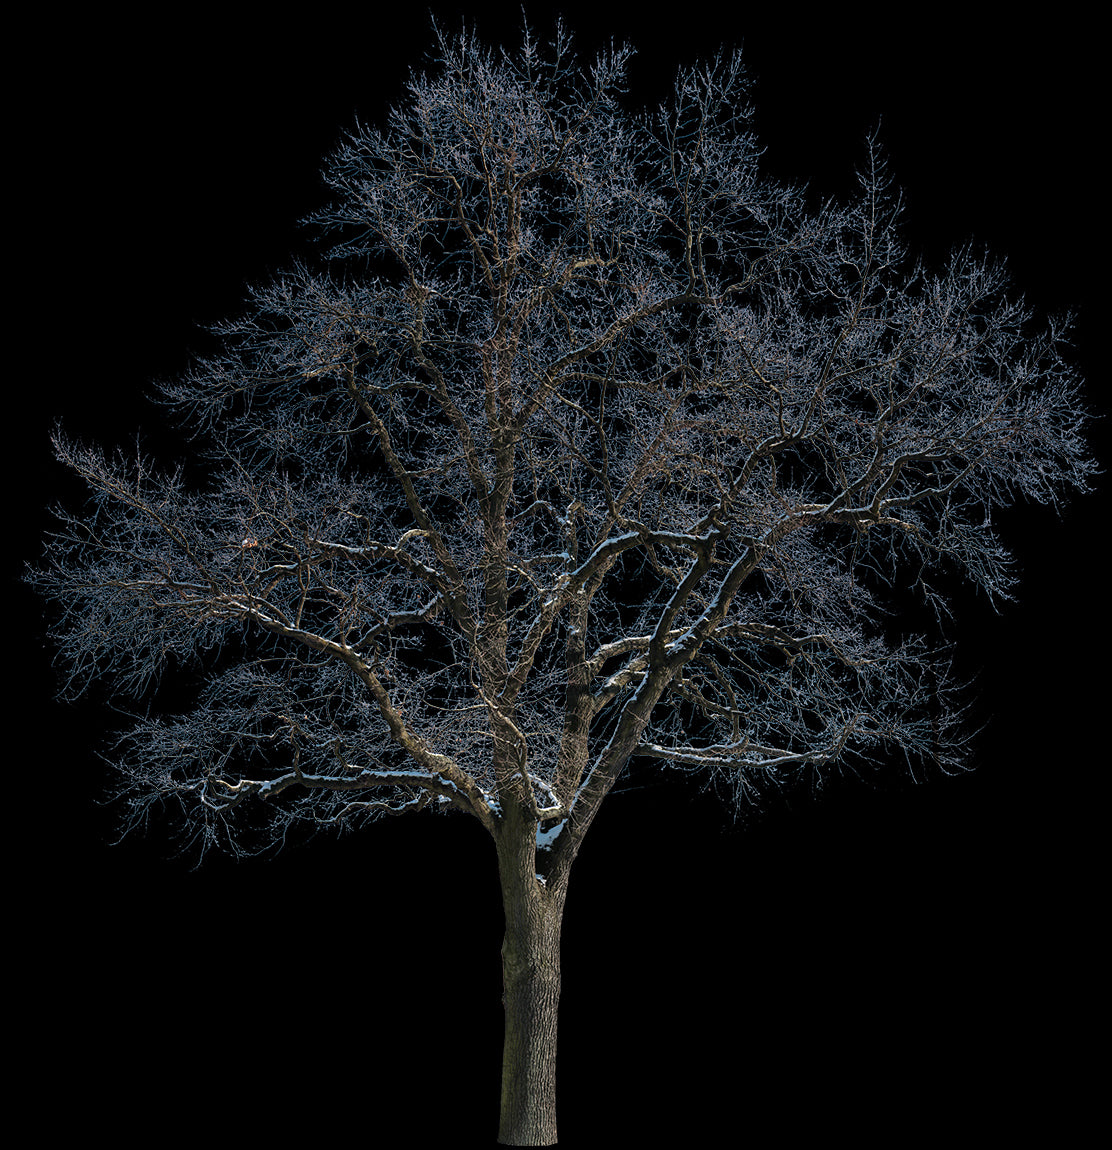 Snow Winter Oak tree L2